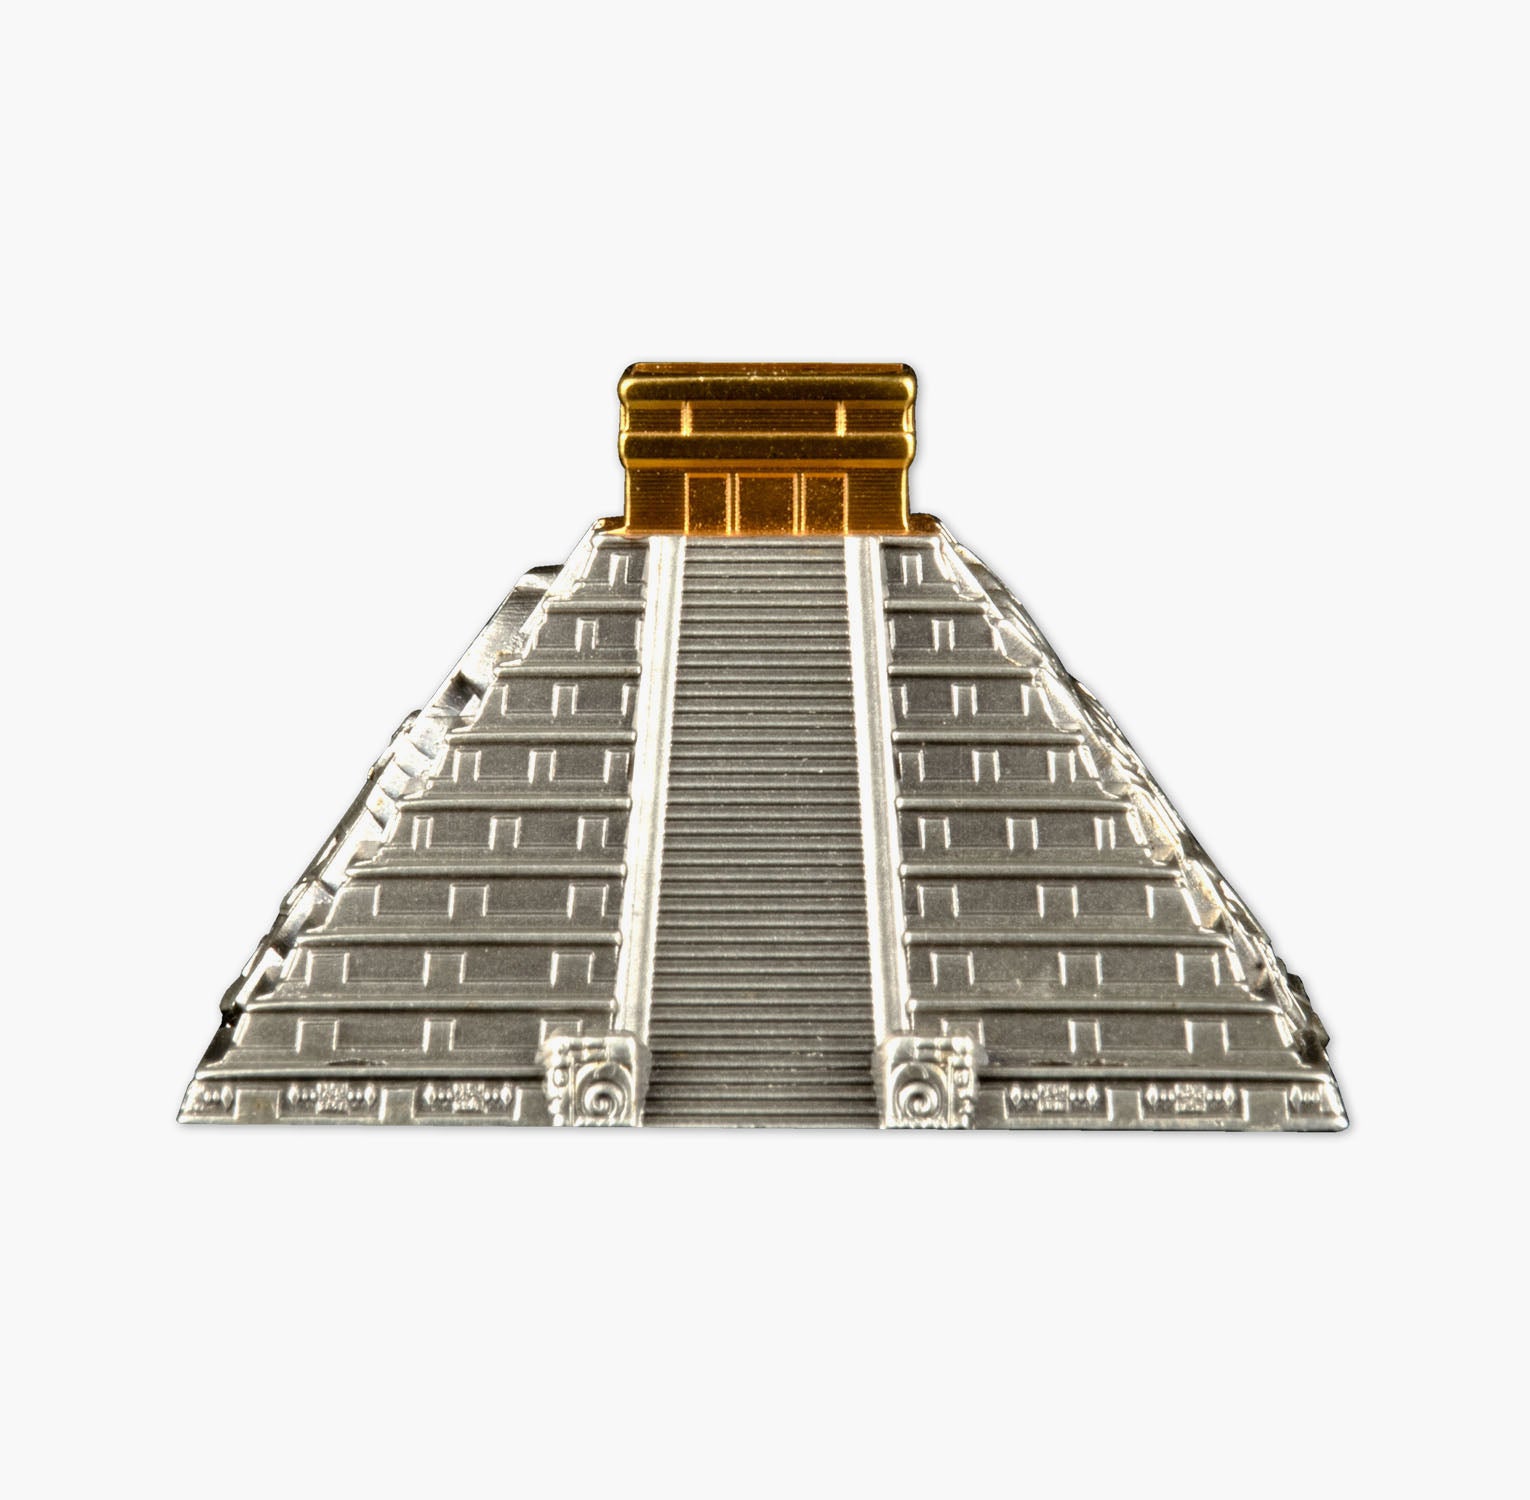 The Mayan Pyramid of Chichen Itza 5oz Solid Silver Coin